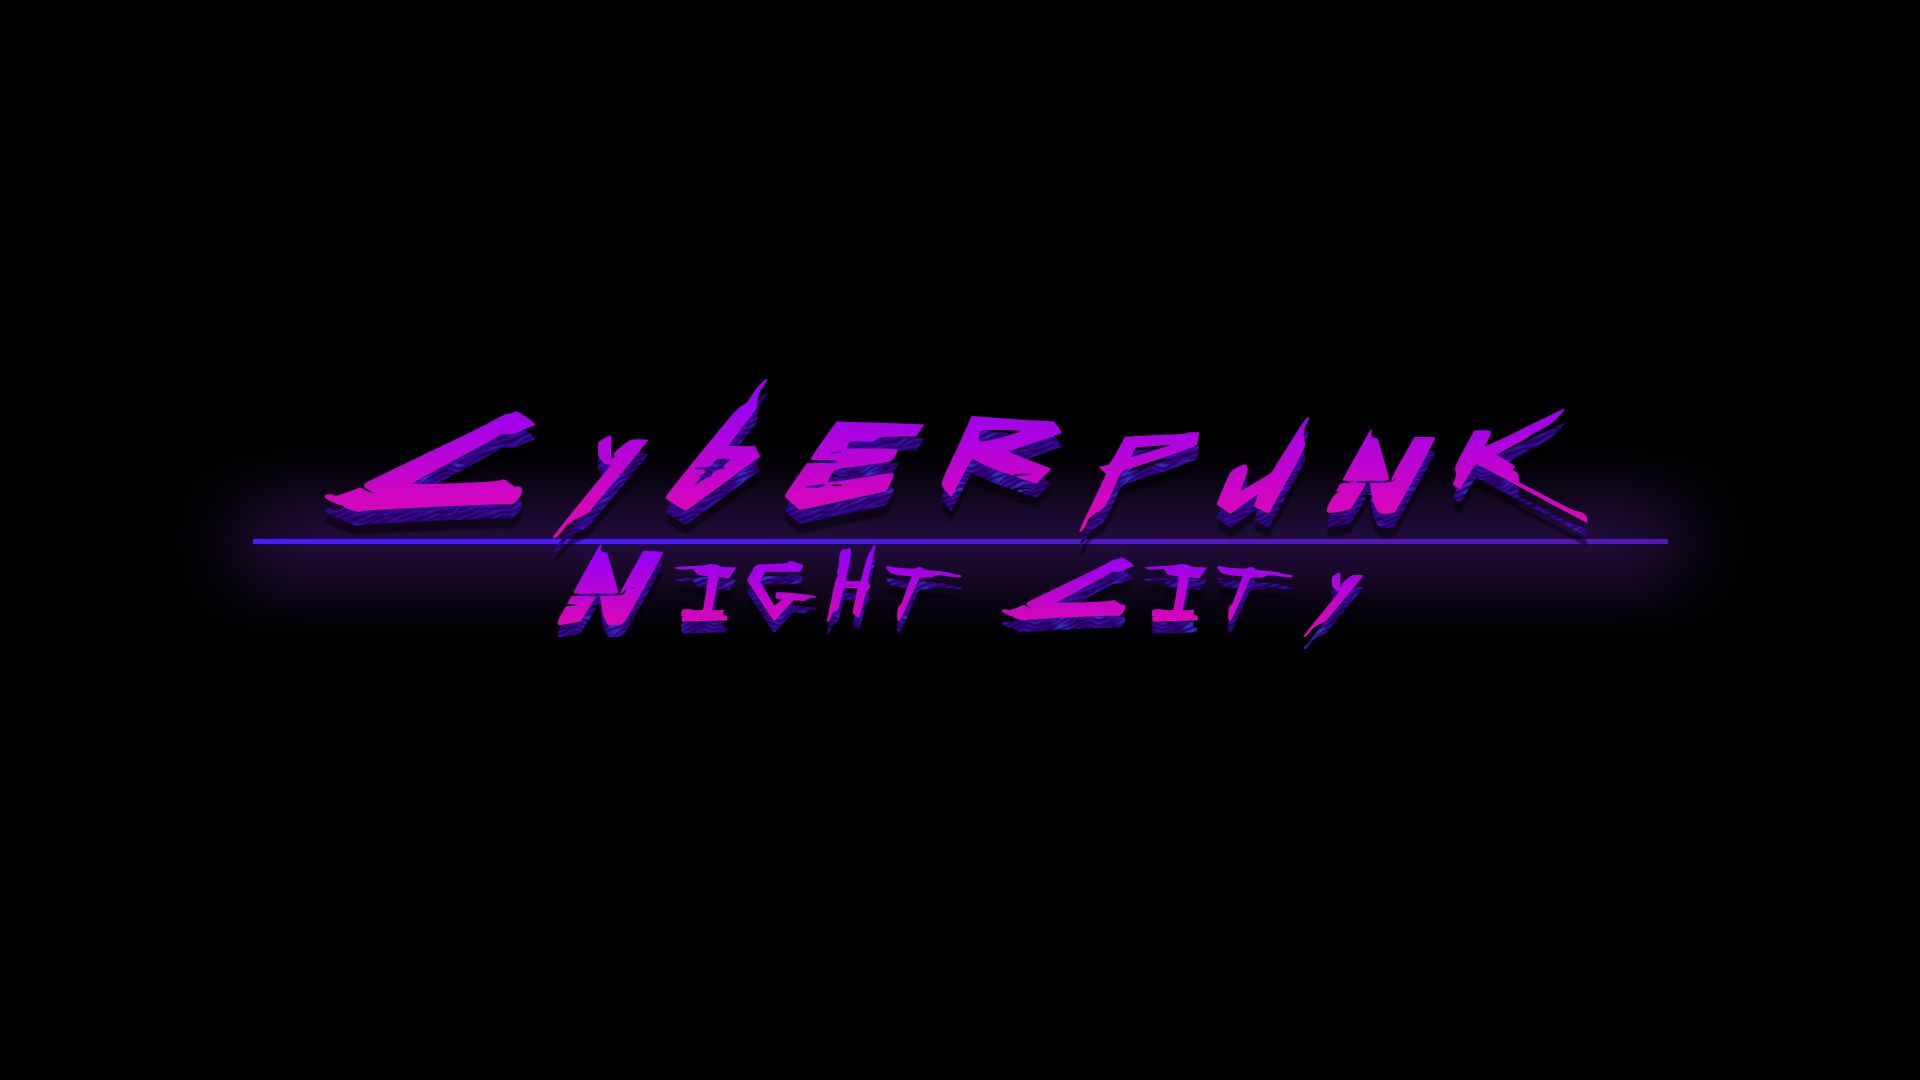 Cyberpunk logo wallpaper фото 75